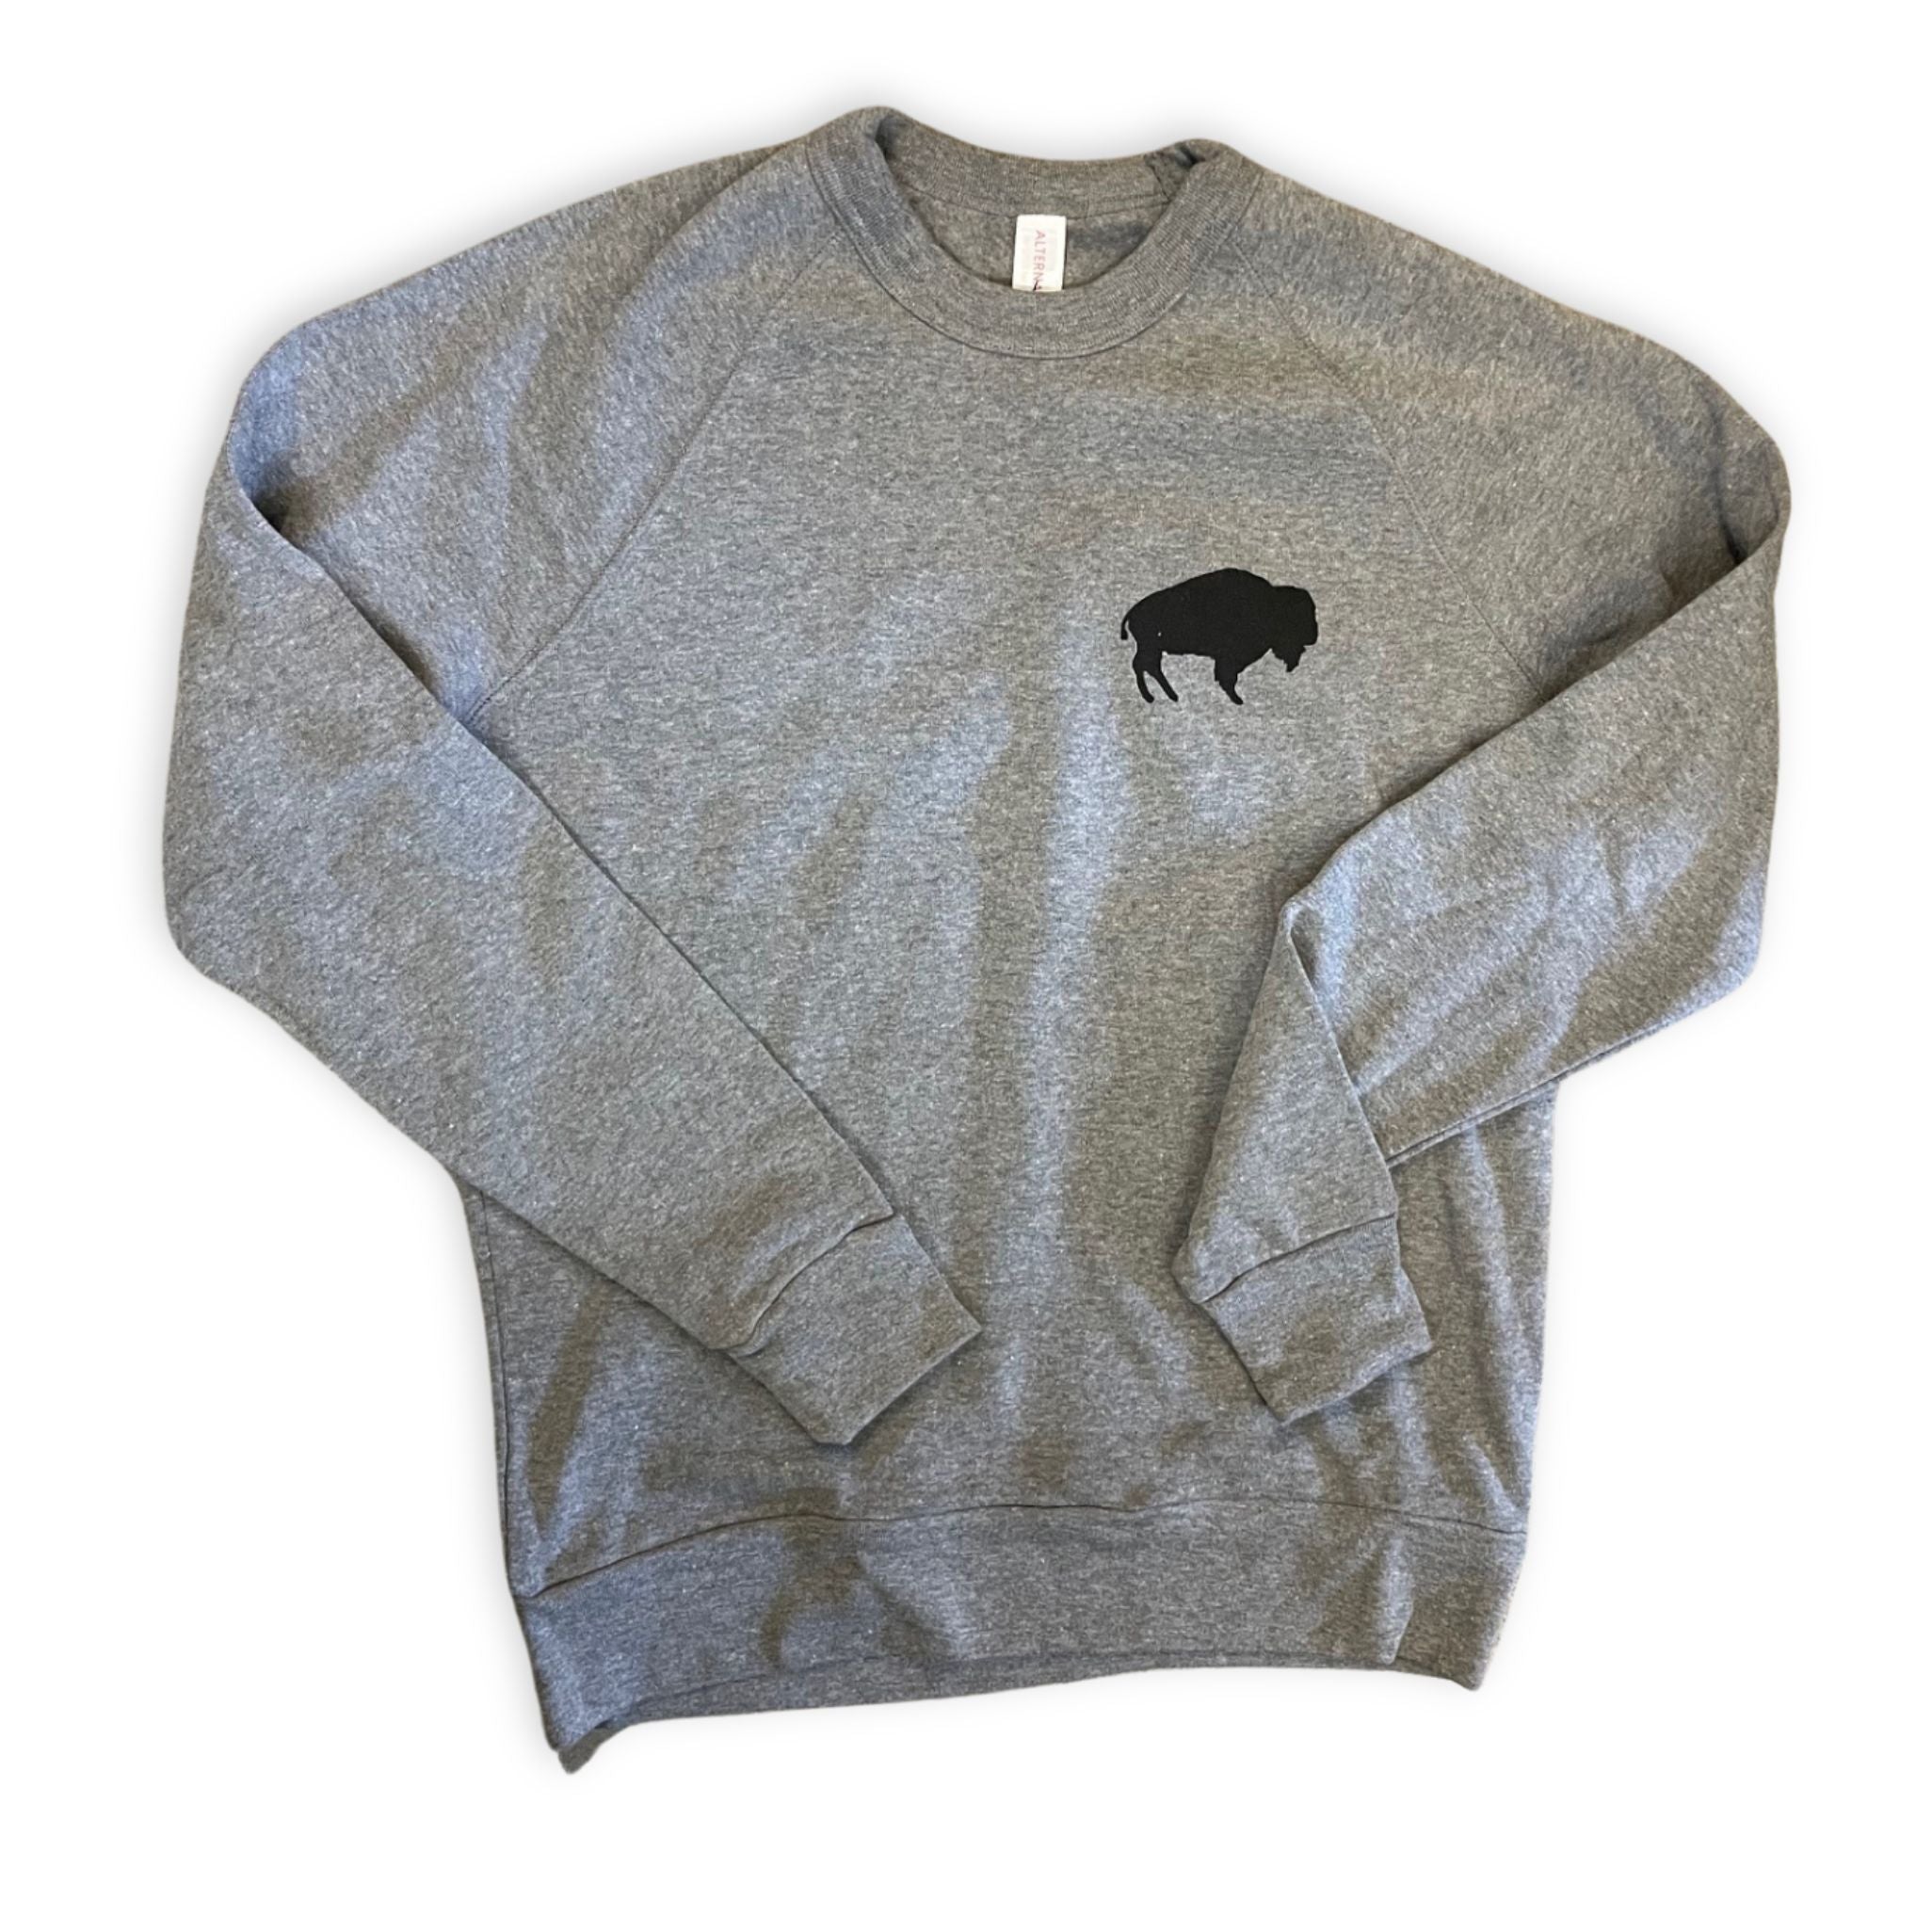 Grey crewneck sweatshirt with a black bison logo on the chest